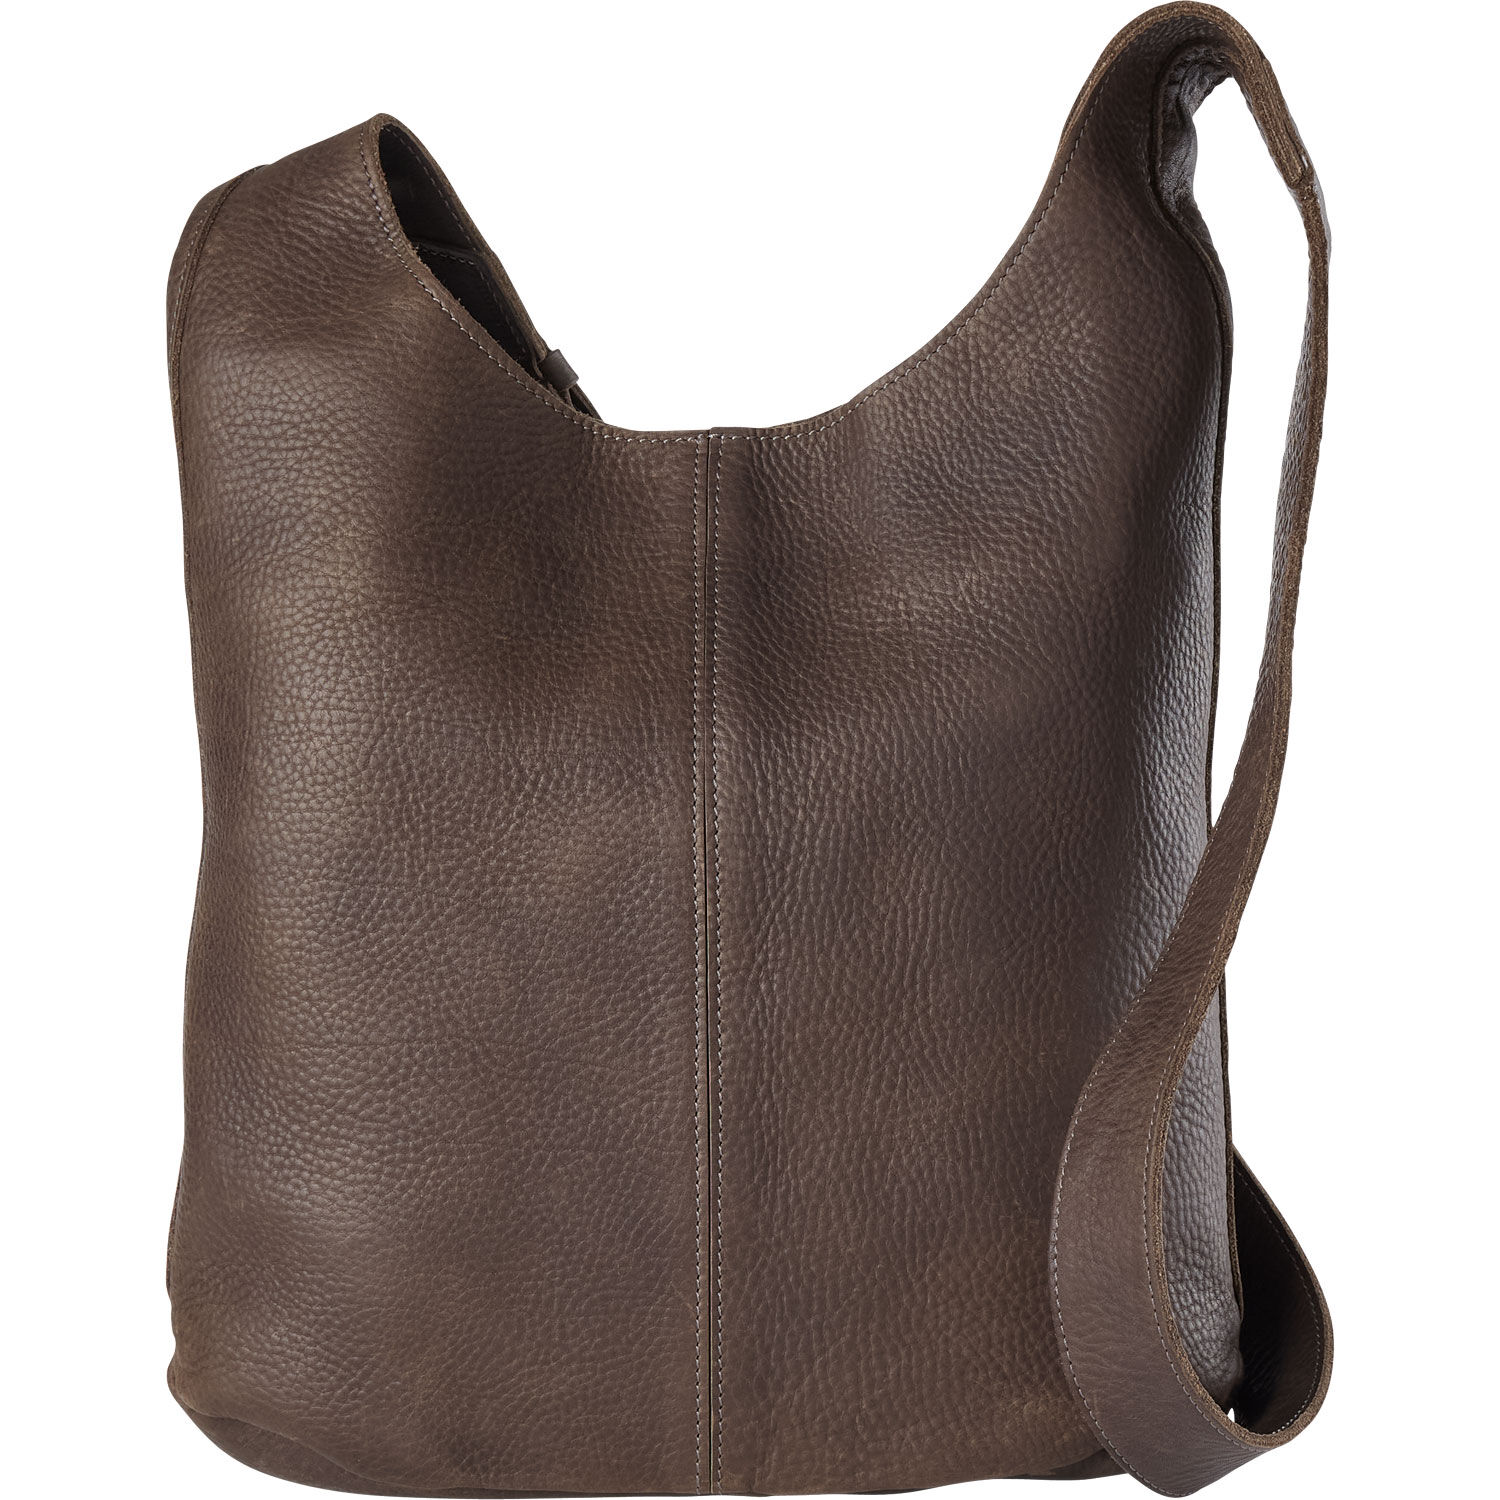 XLarge DULUTH Trading Canvas Travel Bag Weekender Shoulder Tote off white  new  eBay